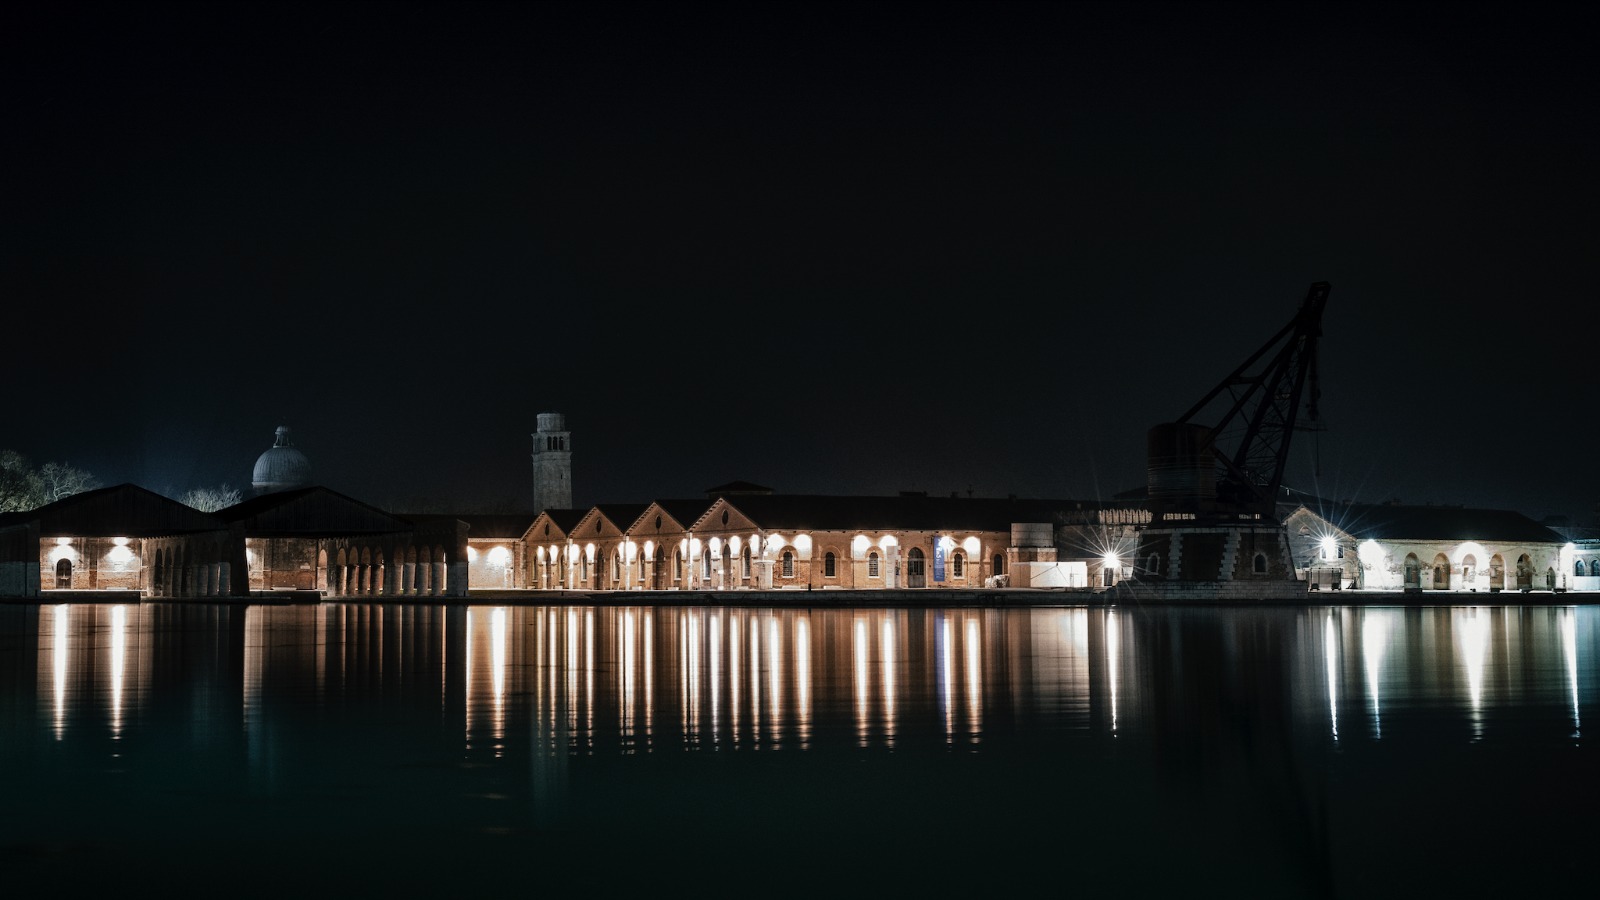 Arsenale of Venice | Arte Laguna Prize